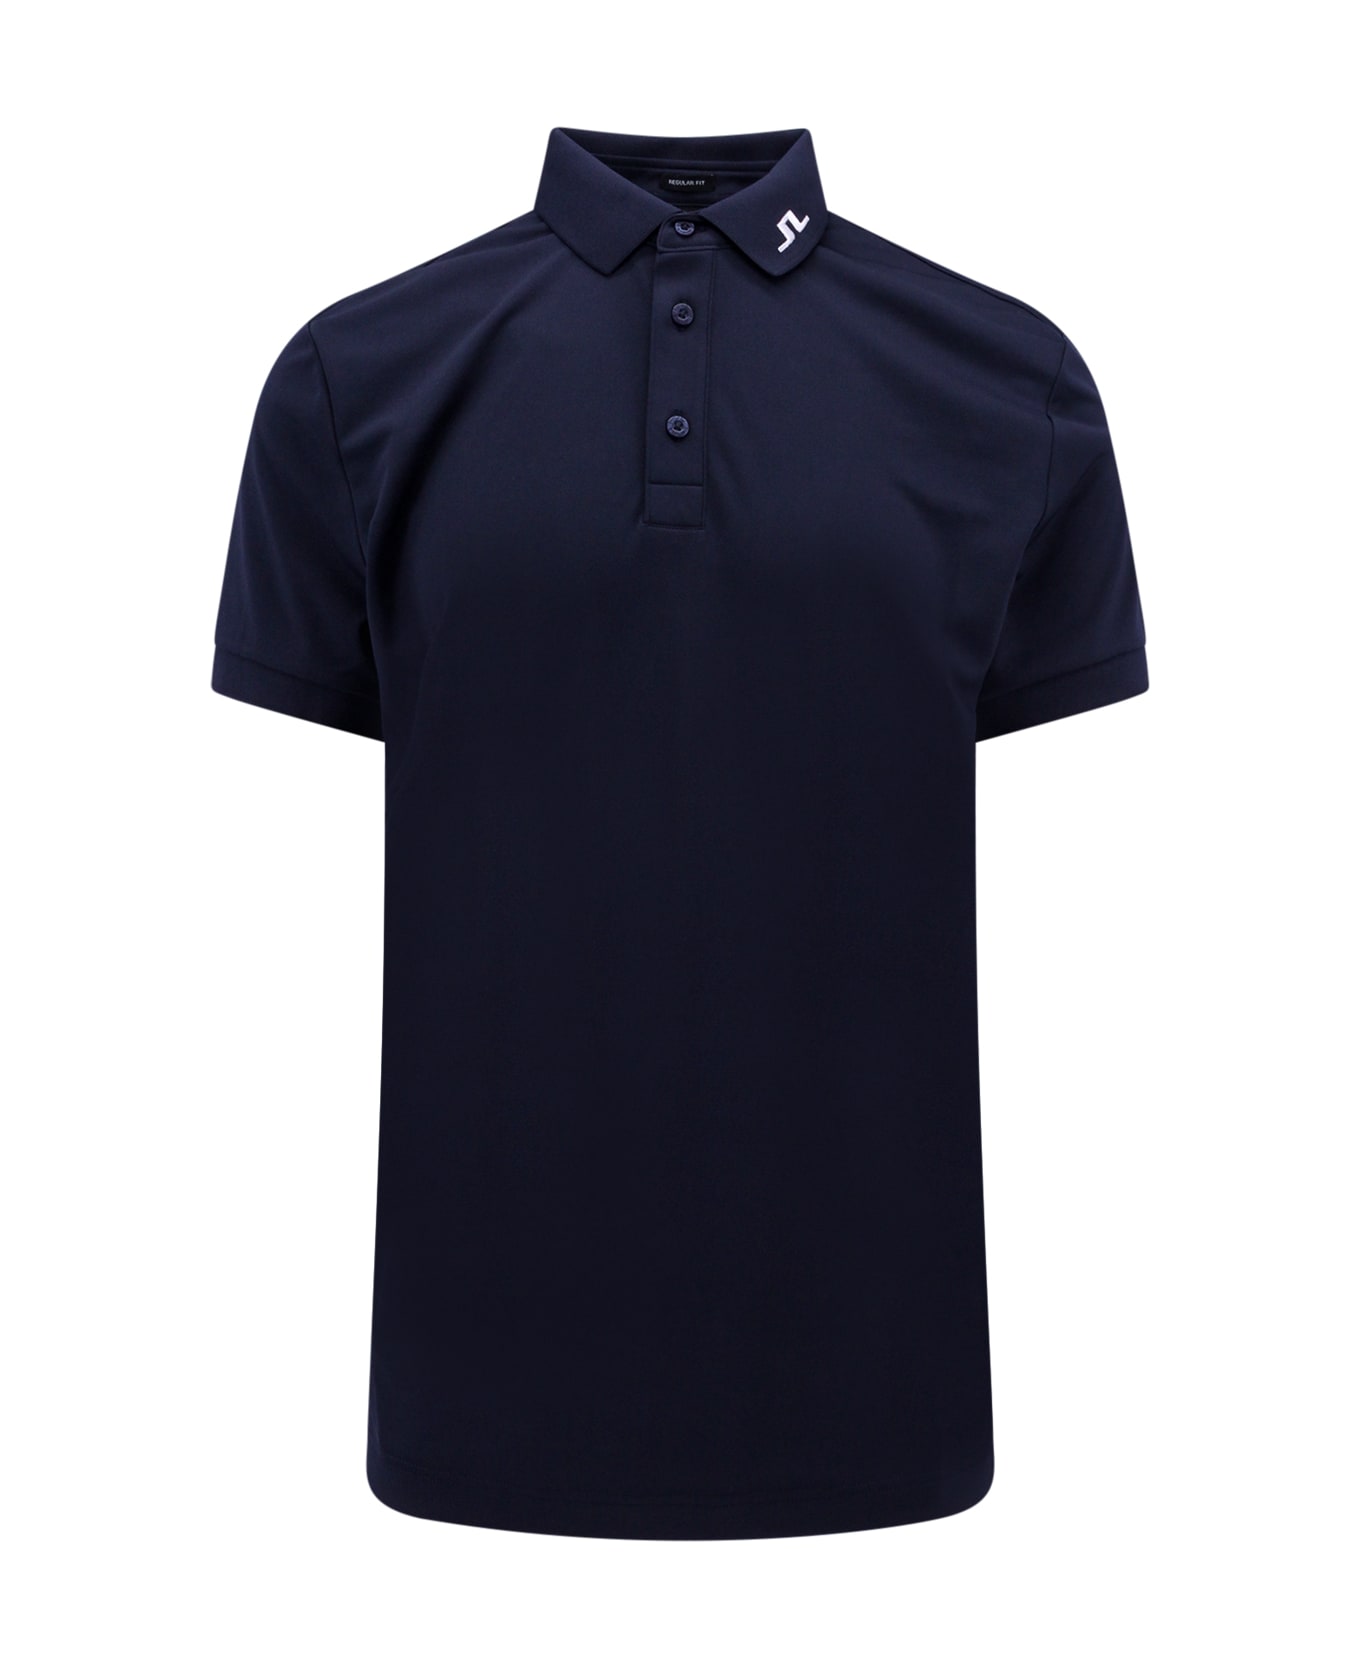 J.Lindeberg Kv Polo Shirt - Blue